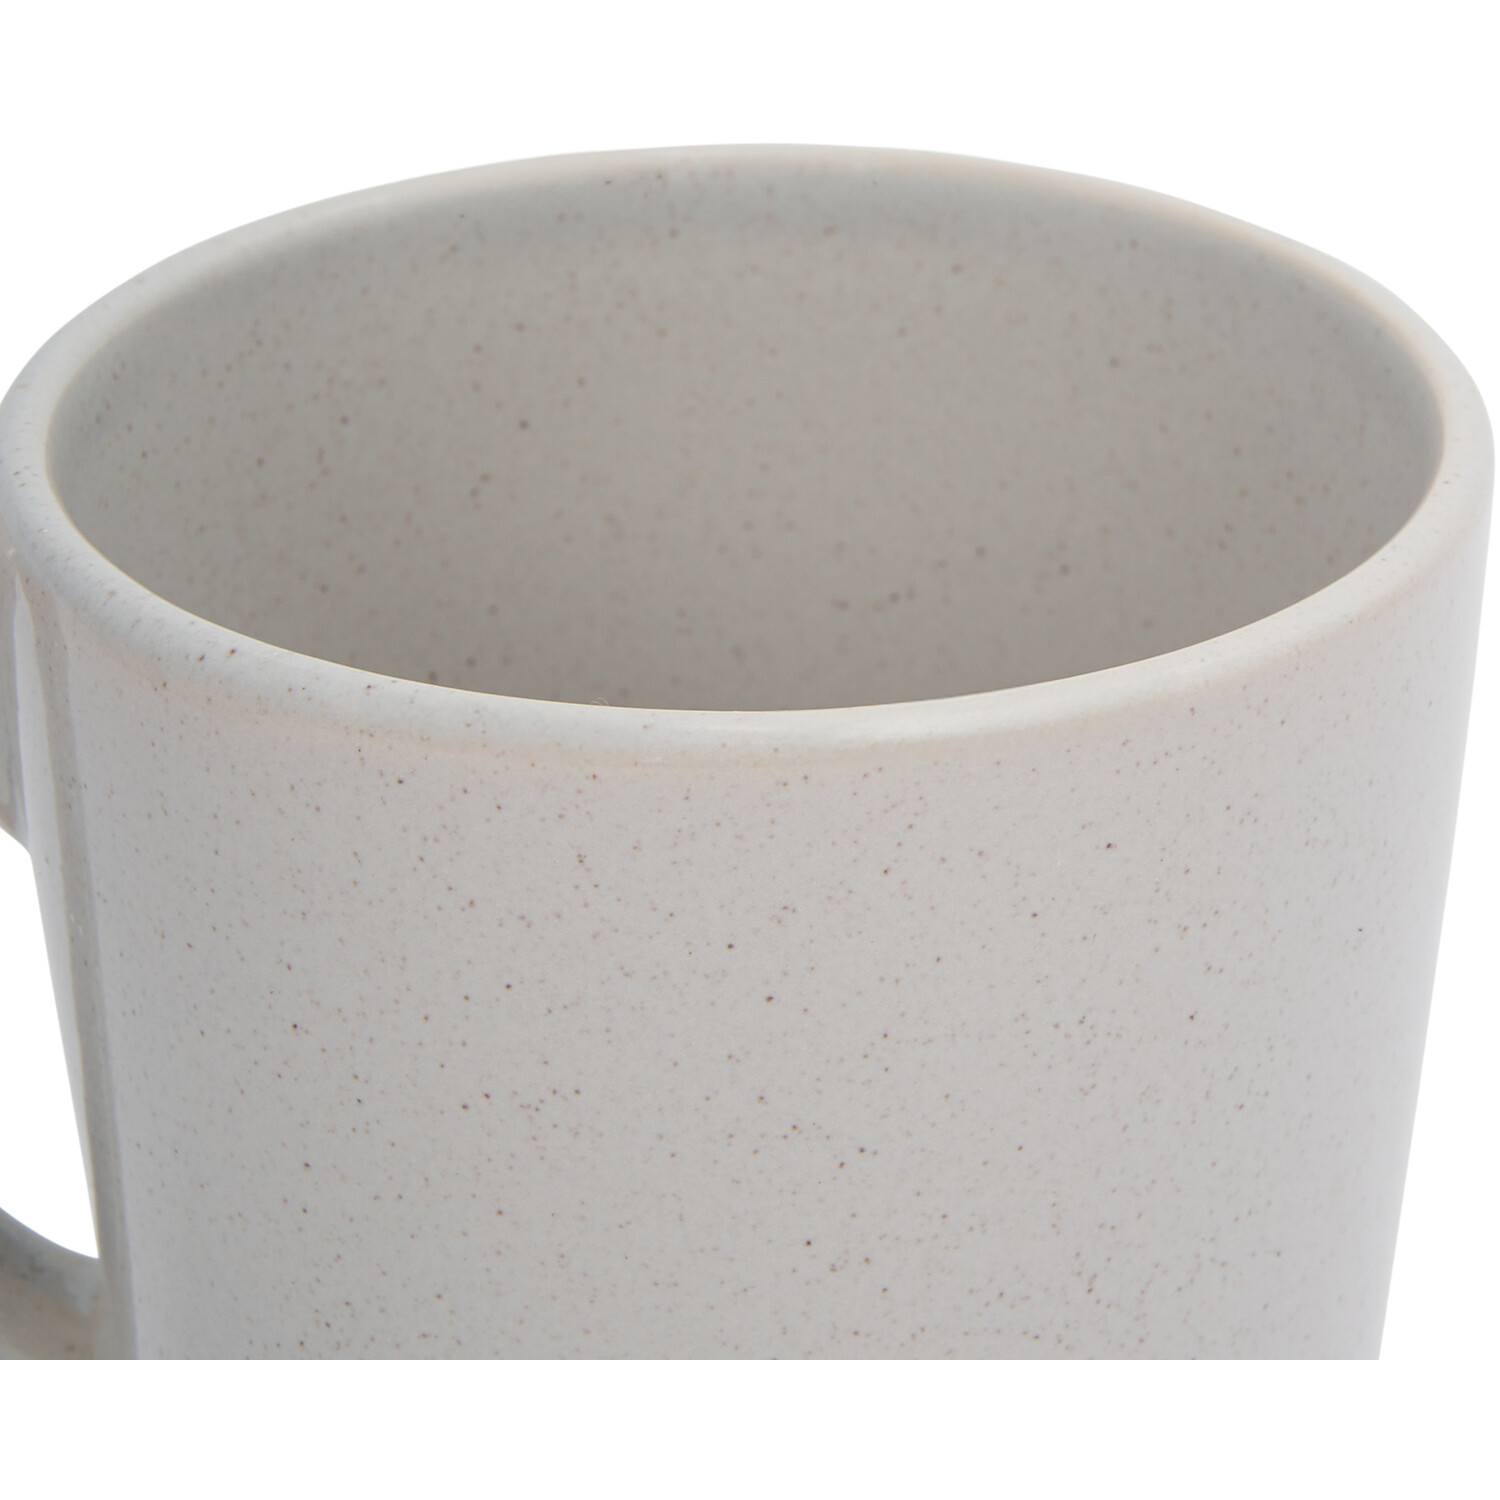 Set of 4 Alta Mugs - Grey Image 4